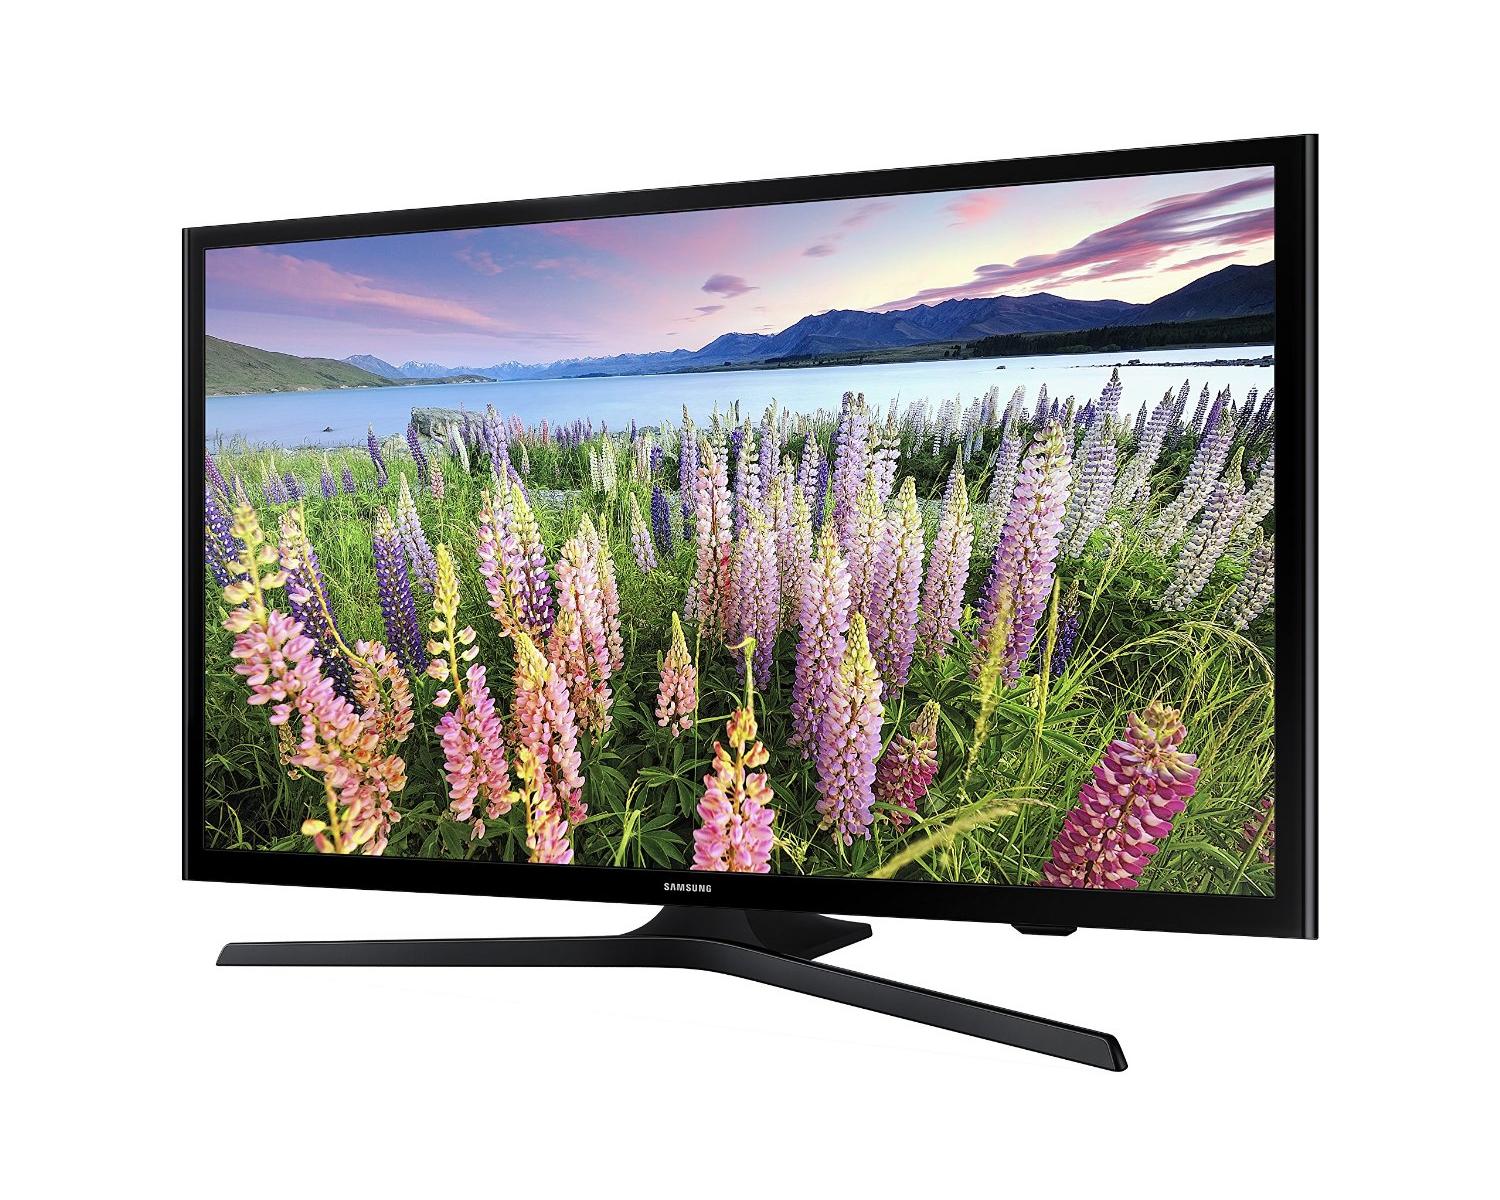 SAMSUNG 50" Class FHD (1080P) LED TV (UN50J5000) - image 2 of 6